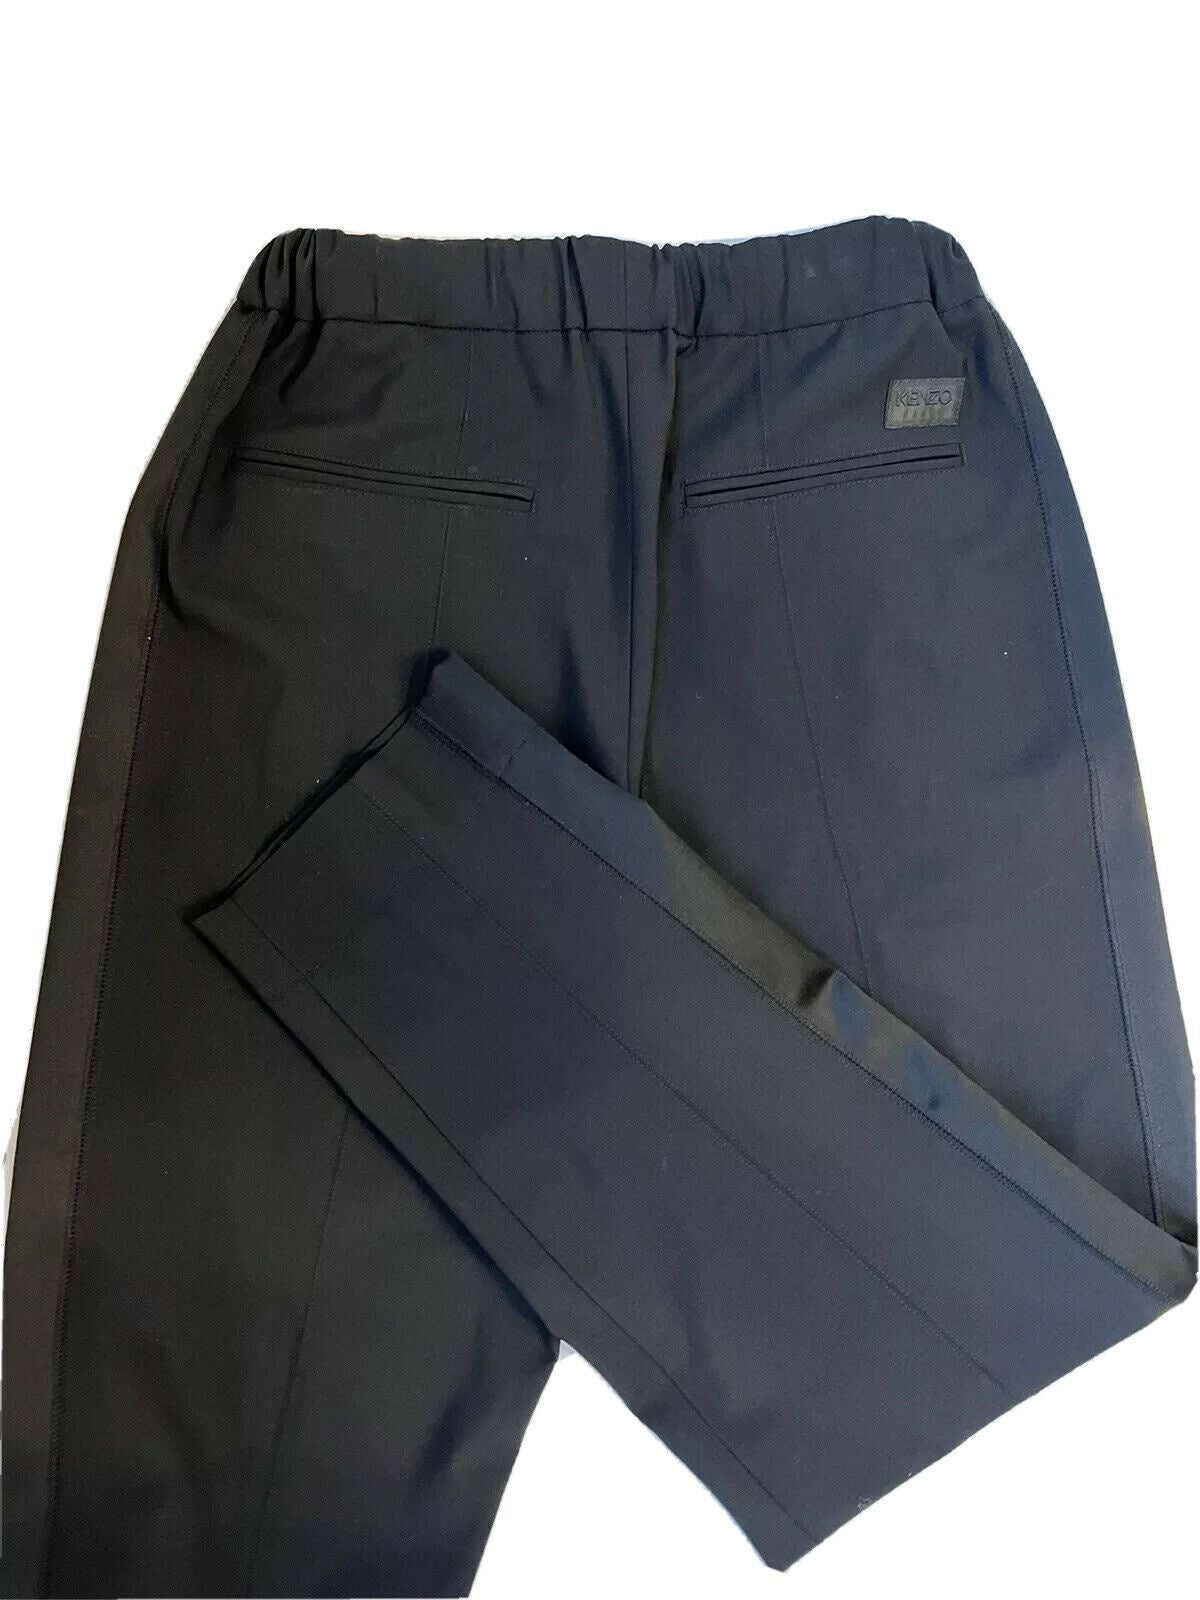 NWT $370 Kenzo Men's Black Festive Wool Casual Pants Size 28 US (44 Euro)